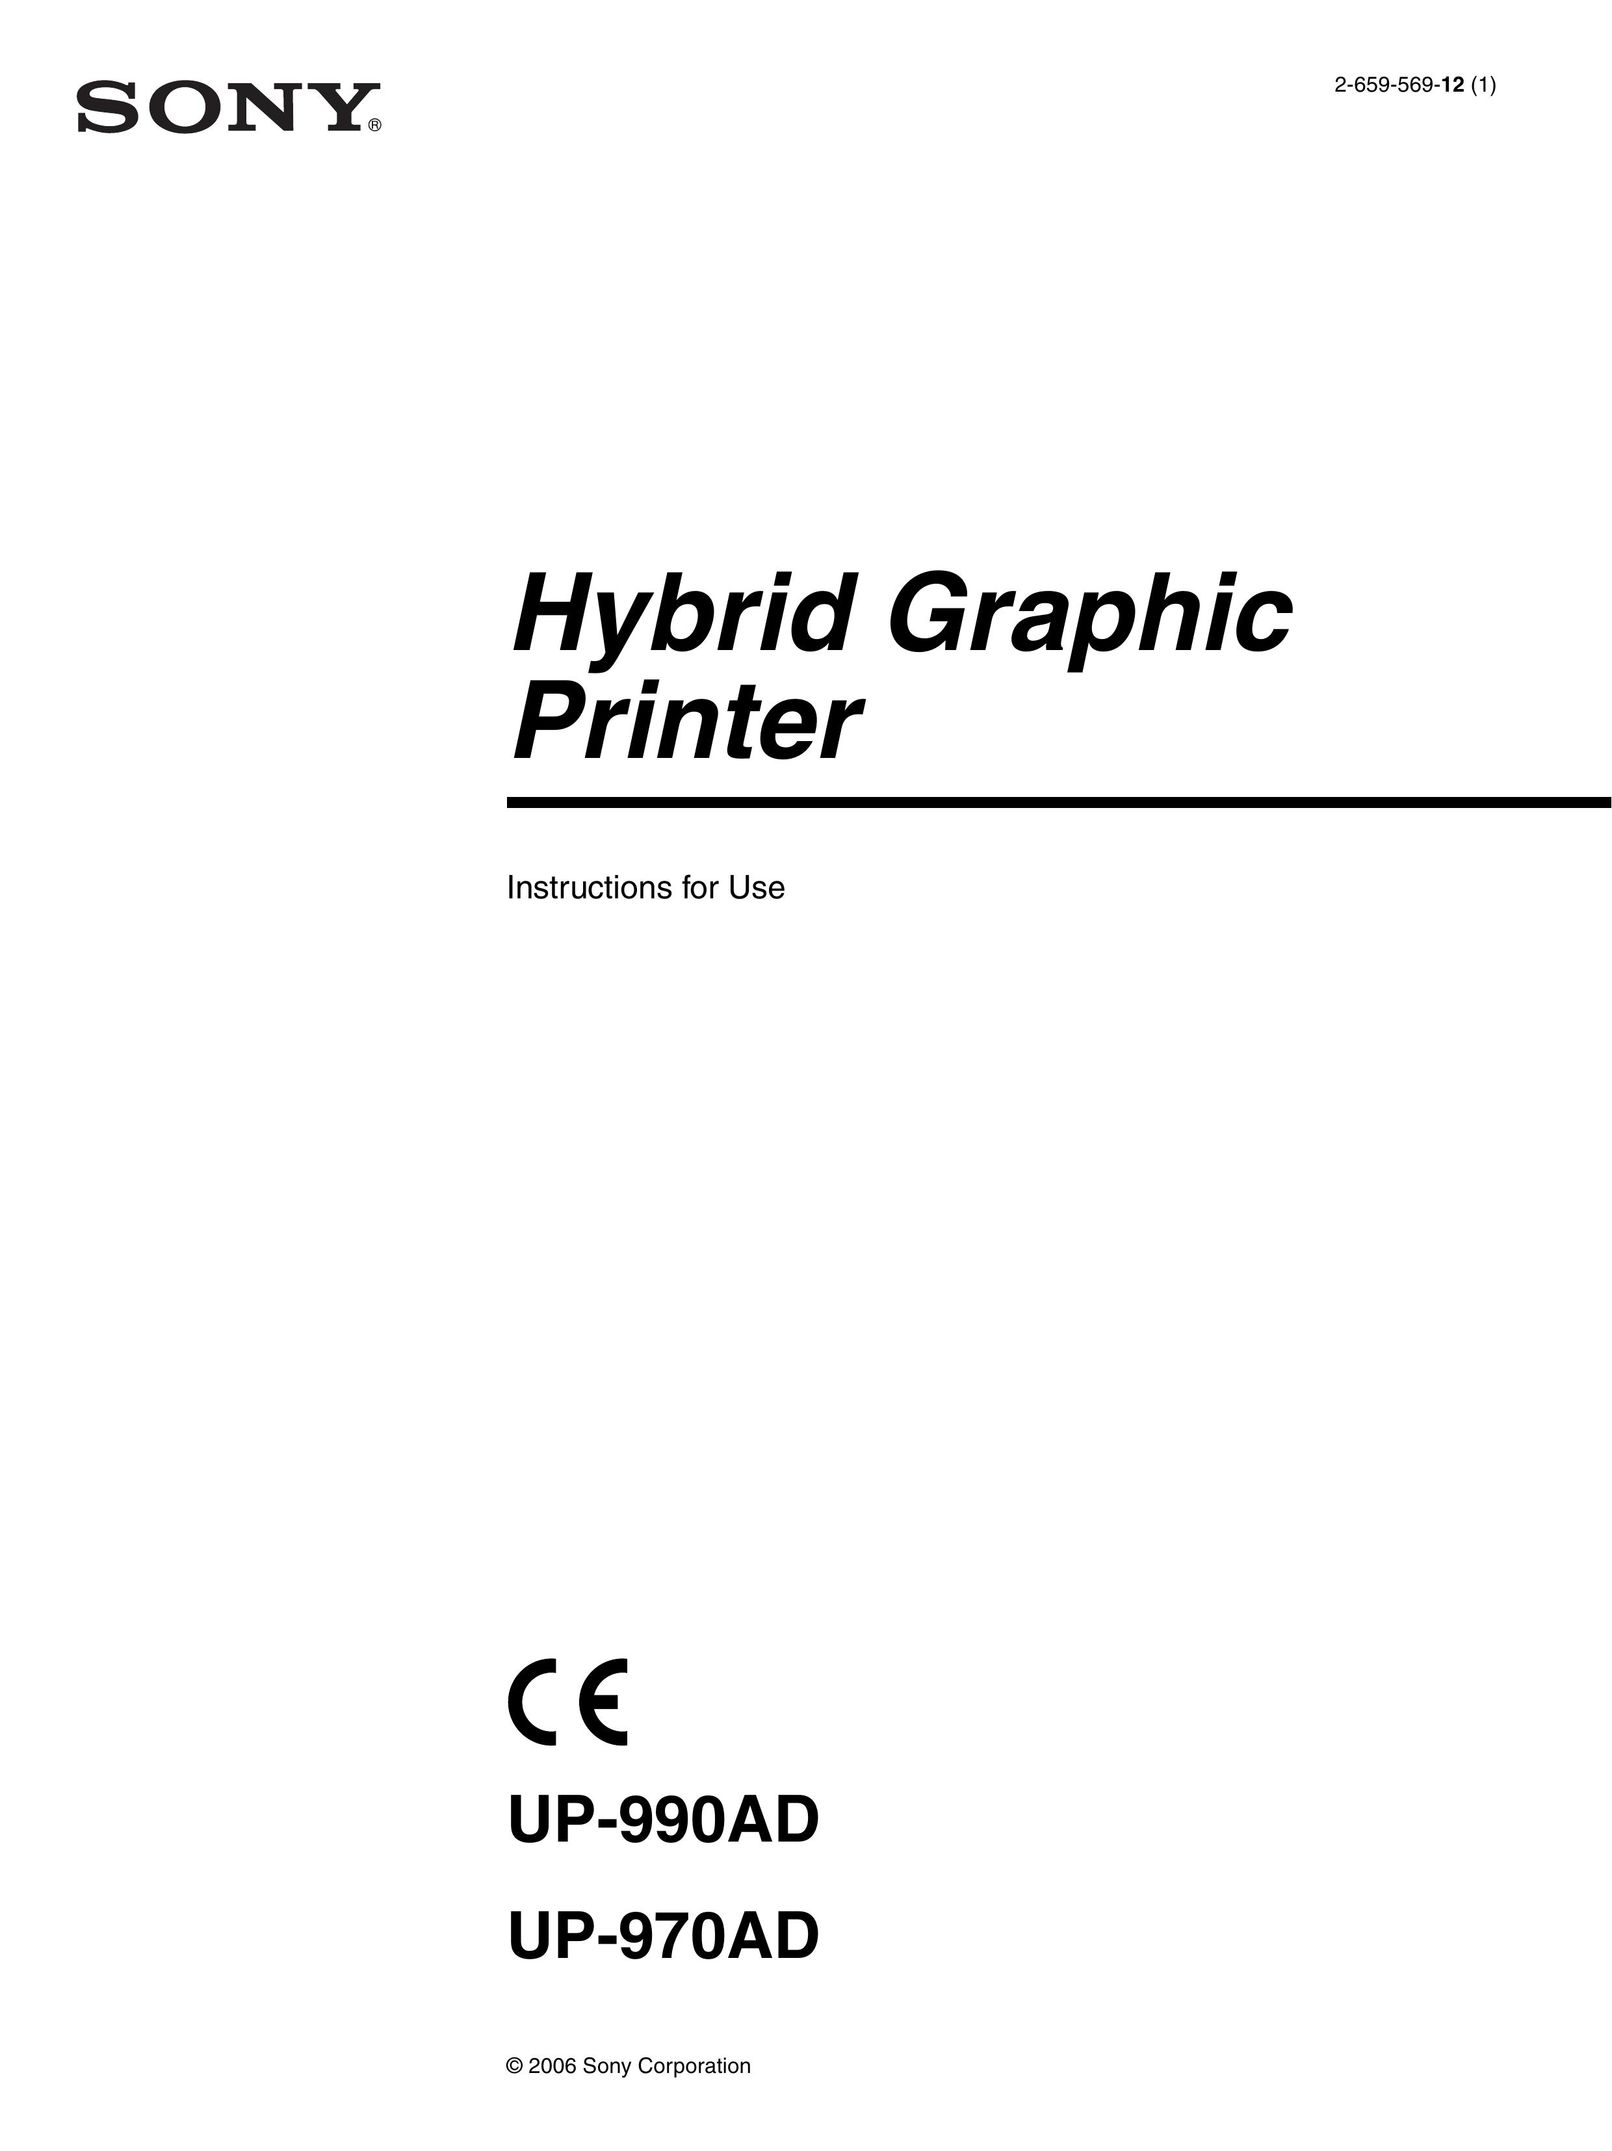 Sony UP-970AD Printer User Manual